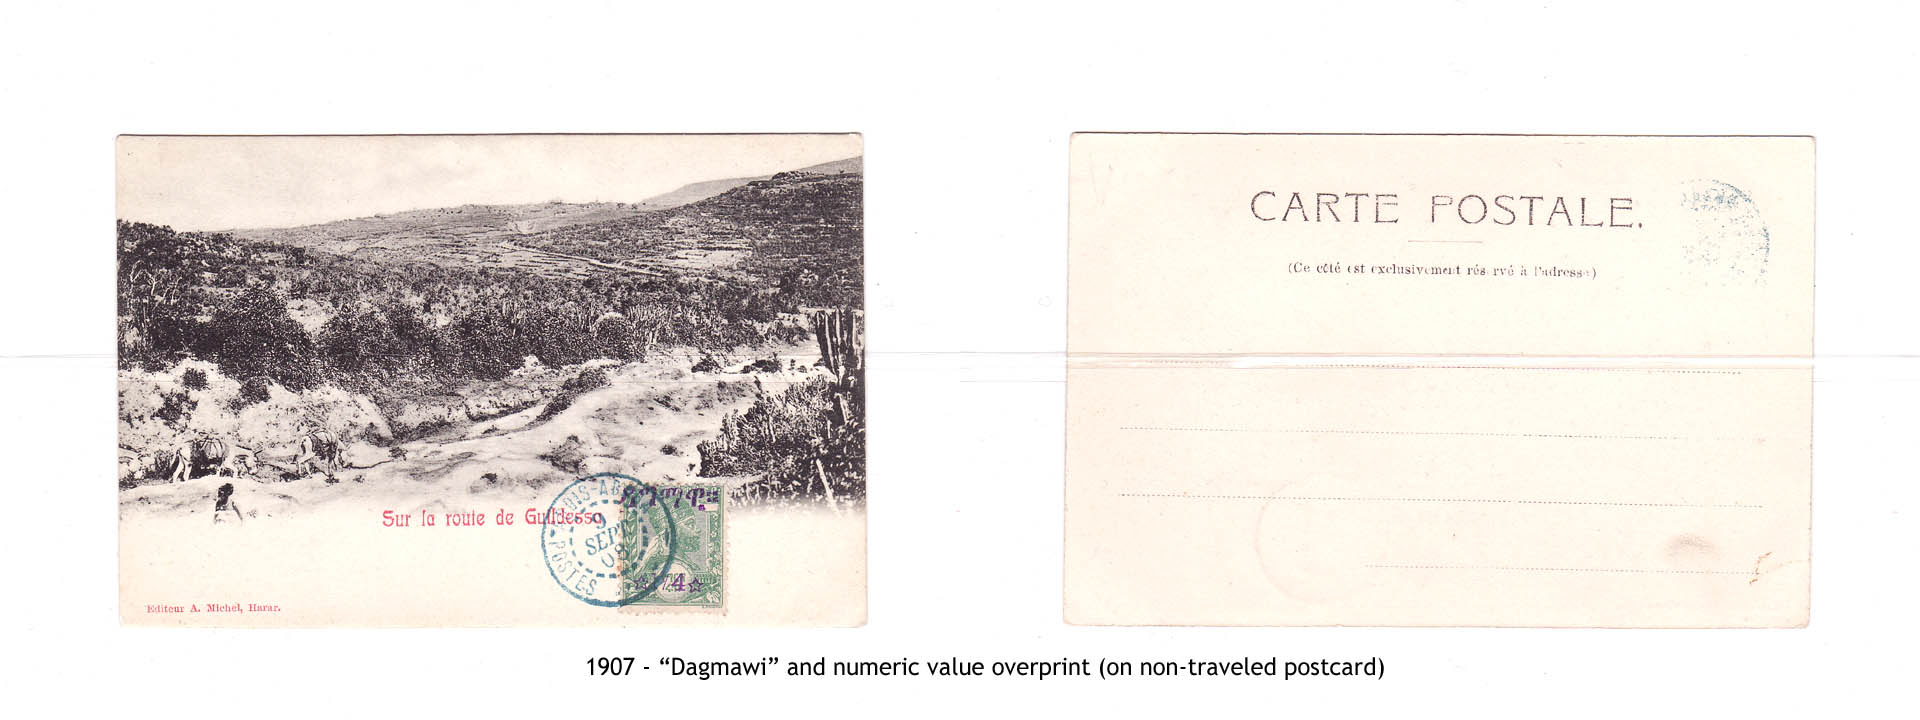 1907 - “Dagmawi” + numeric value overprint